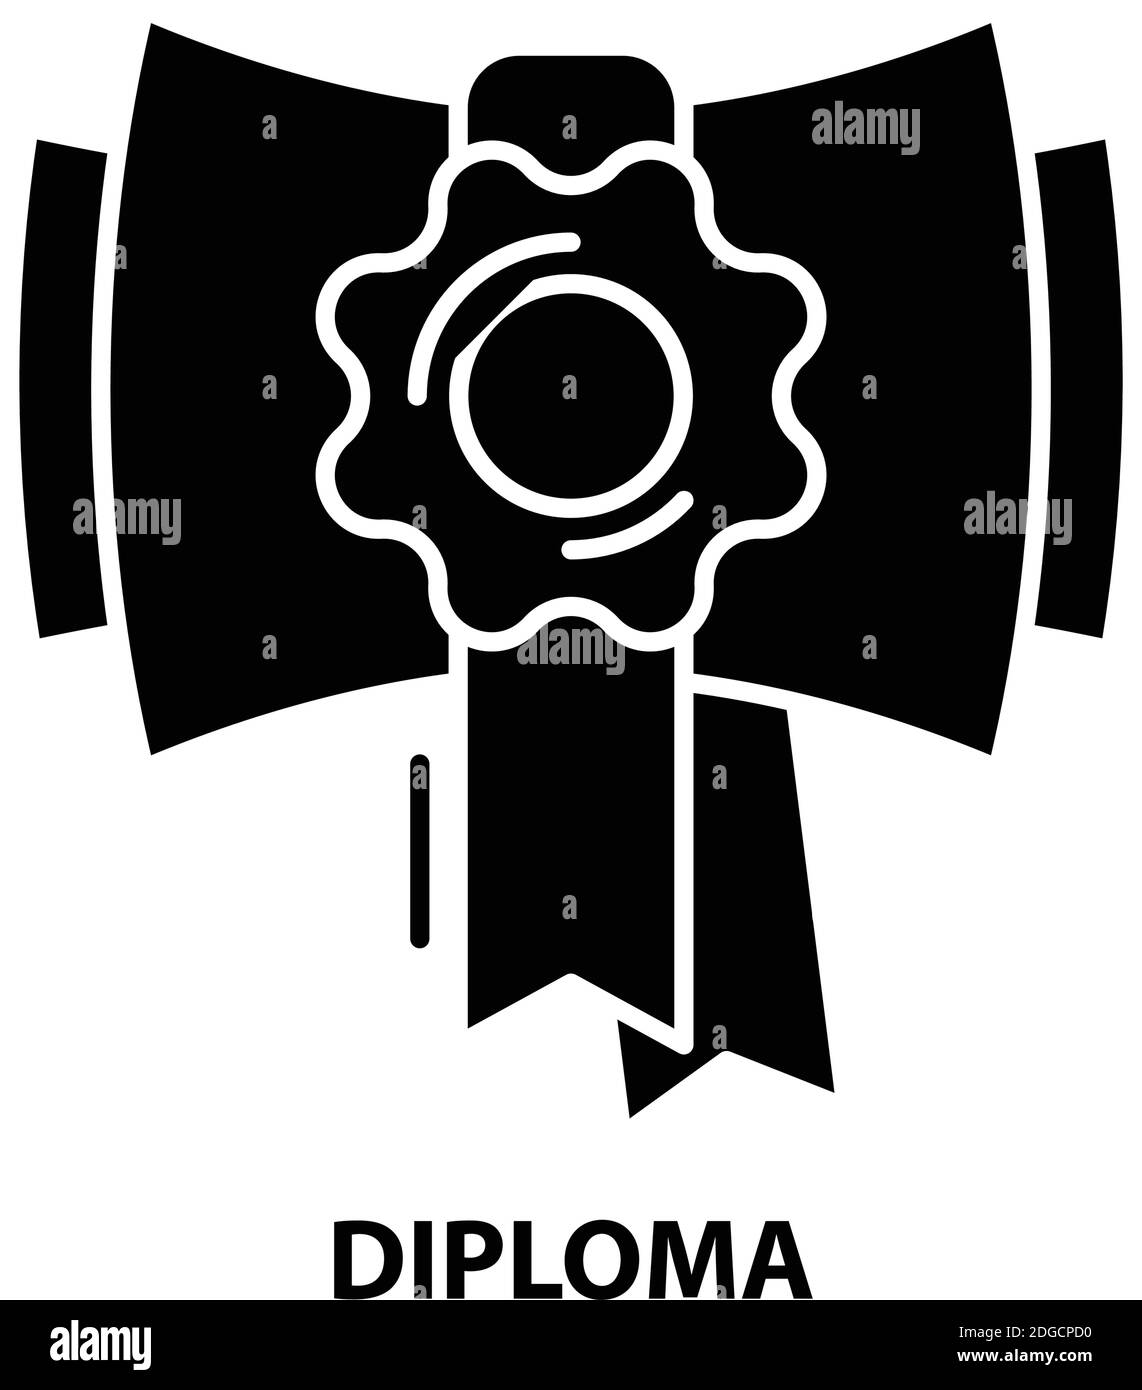 diploma symbol icon, black vector sign with editable strokes, concept illustration Stock Vector